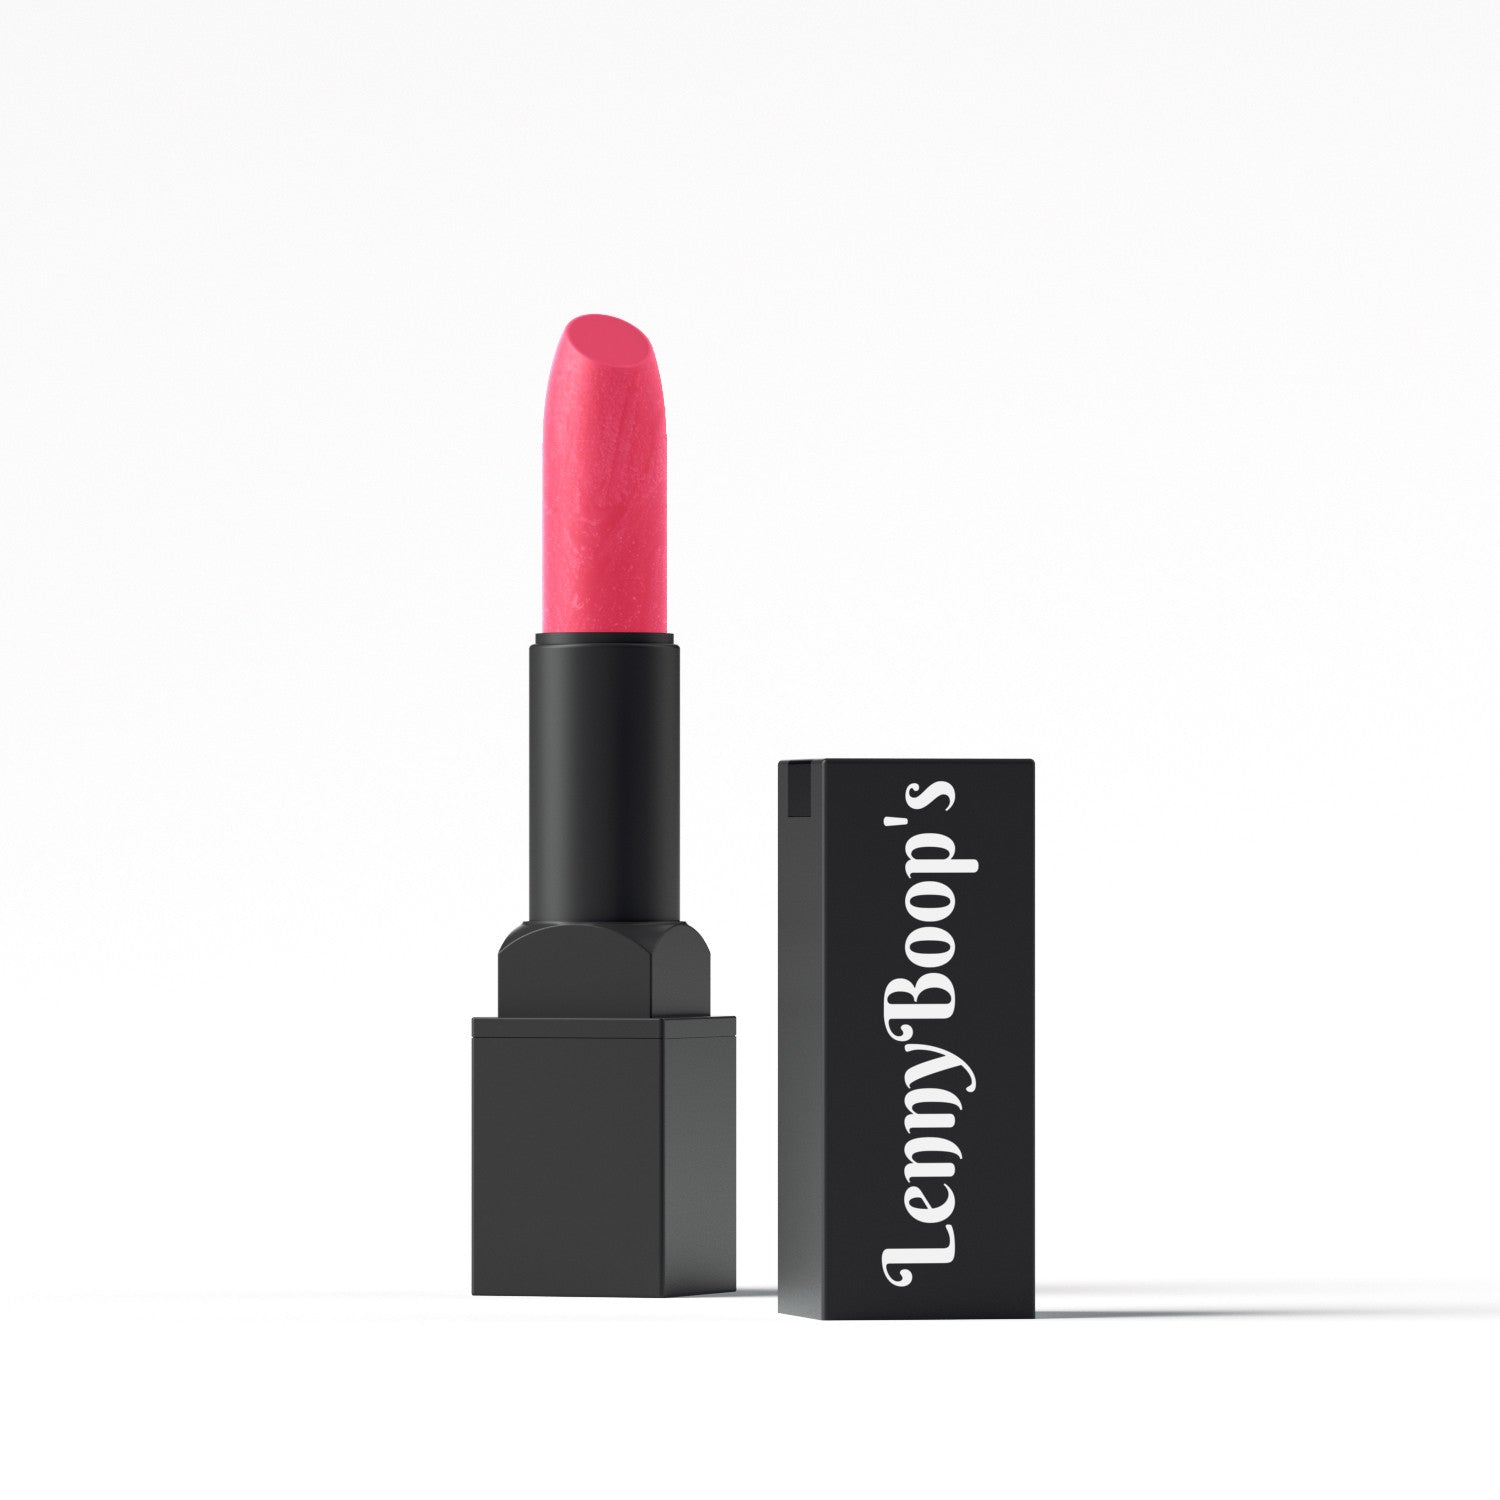 Lipstick-8105